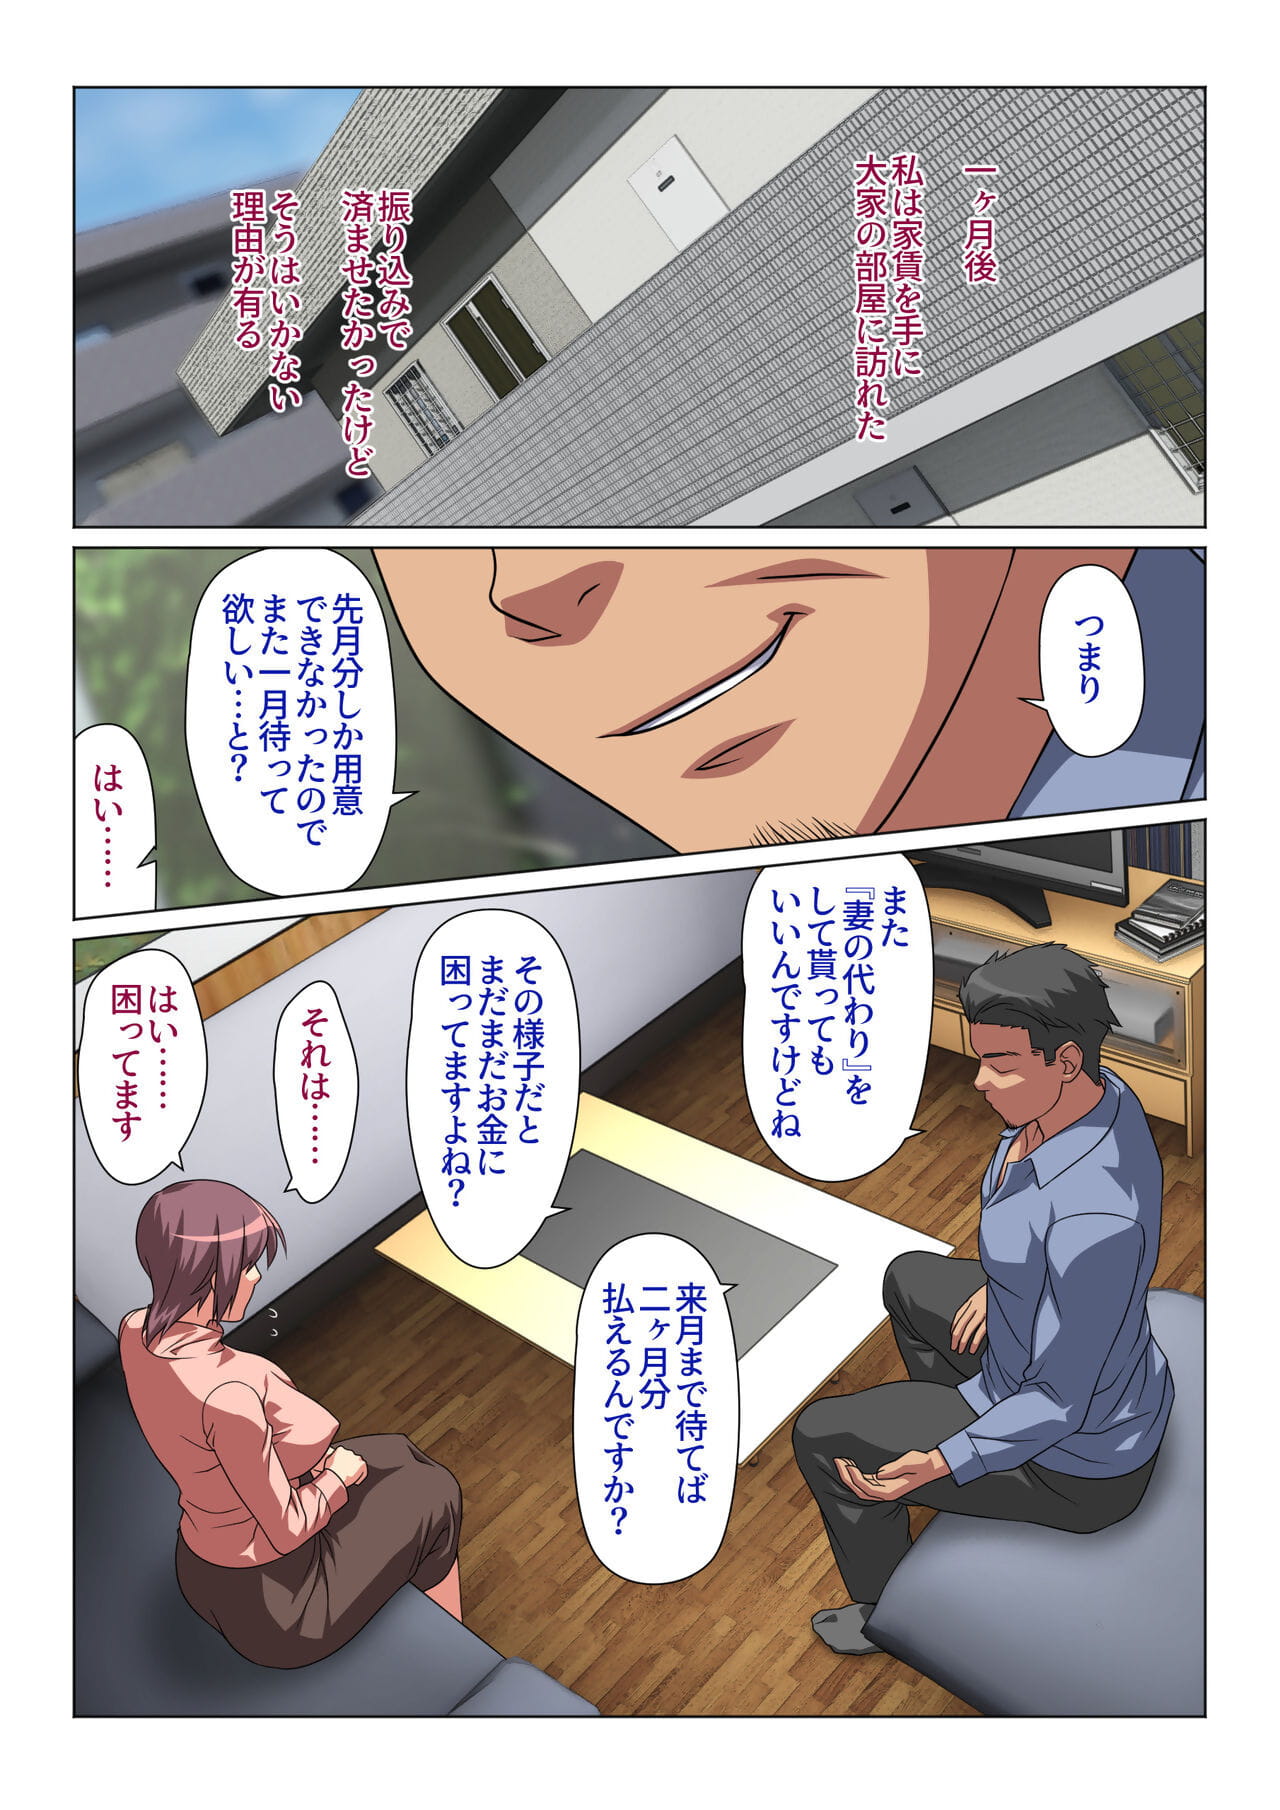 tokidoki watashi โคโน่ hito ไม่ oku ของเดือนมุฮัรร็อม ดี natte imasu page 1